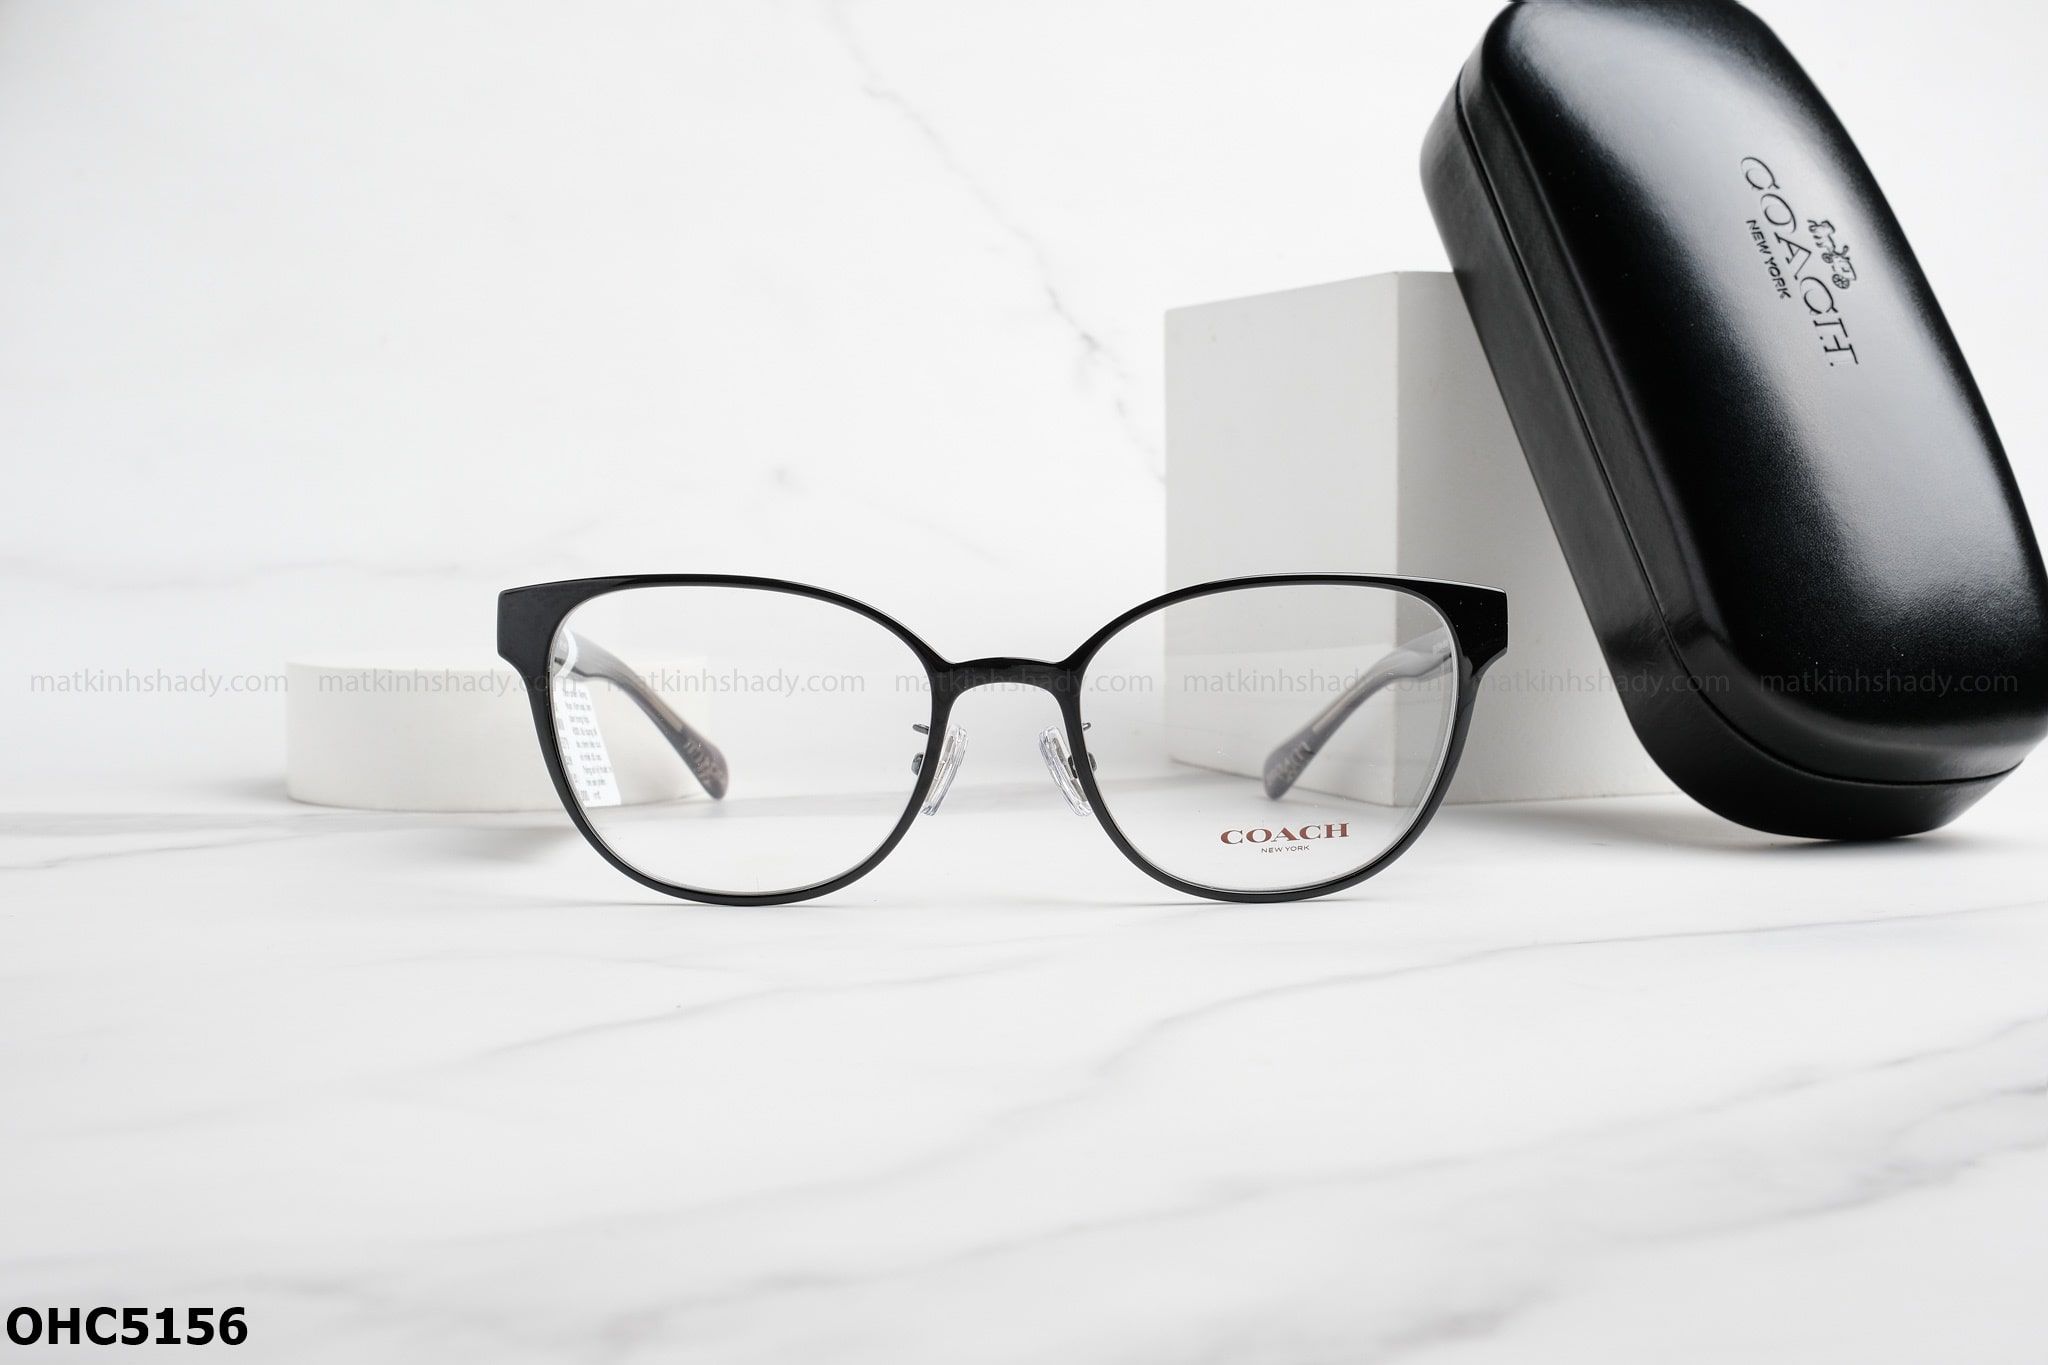  Coach Eyewear - Glasses - OHC5156 